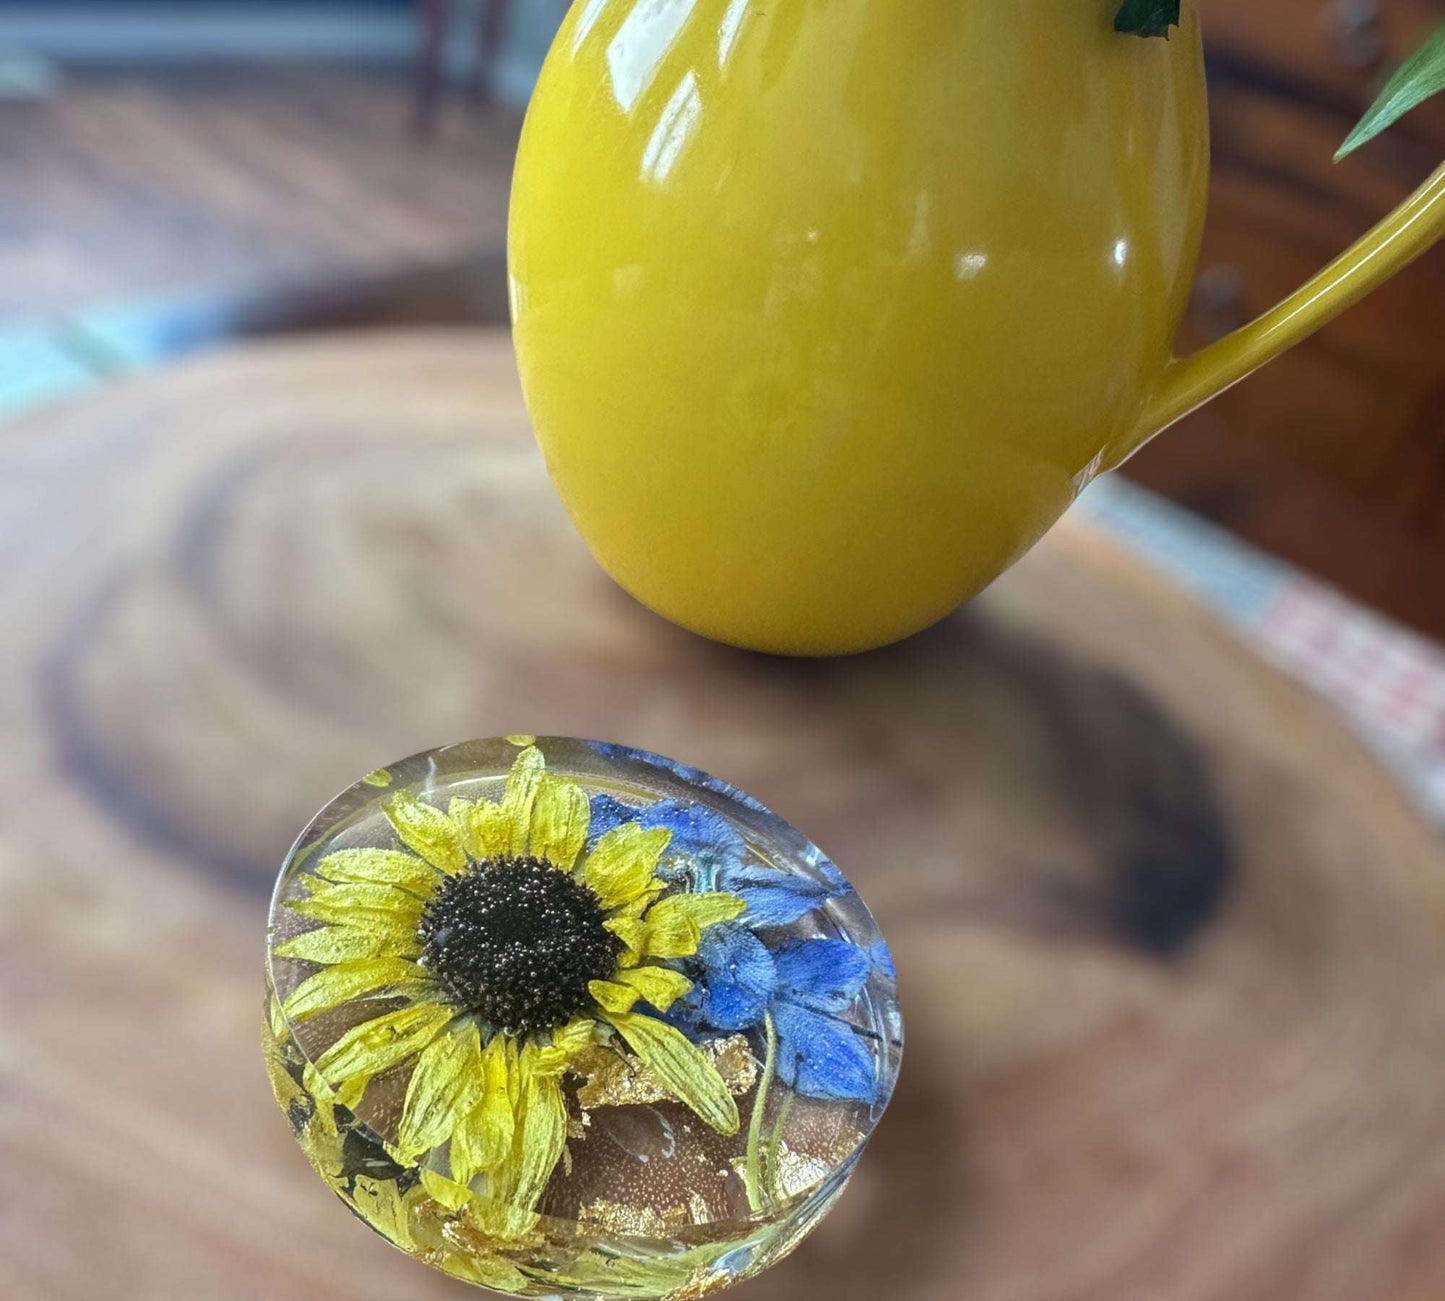 Golden Blooms Sunflower Coaster - Stylish Home Decor Sunflower Accent